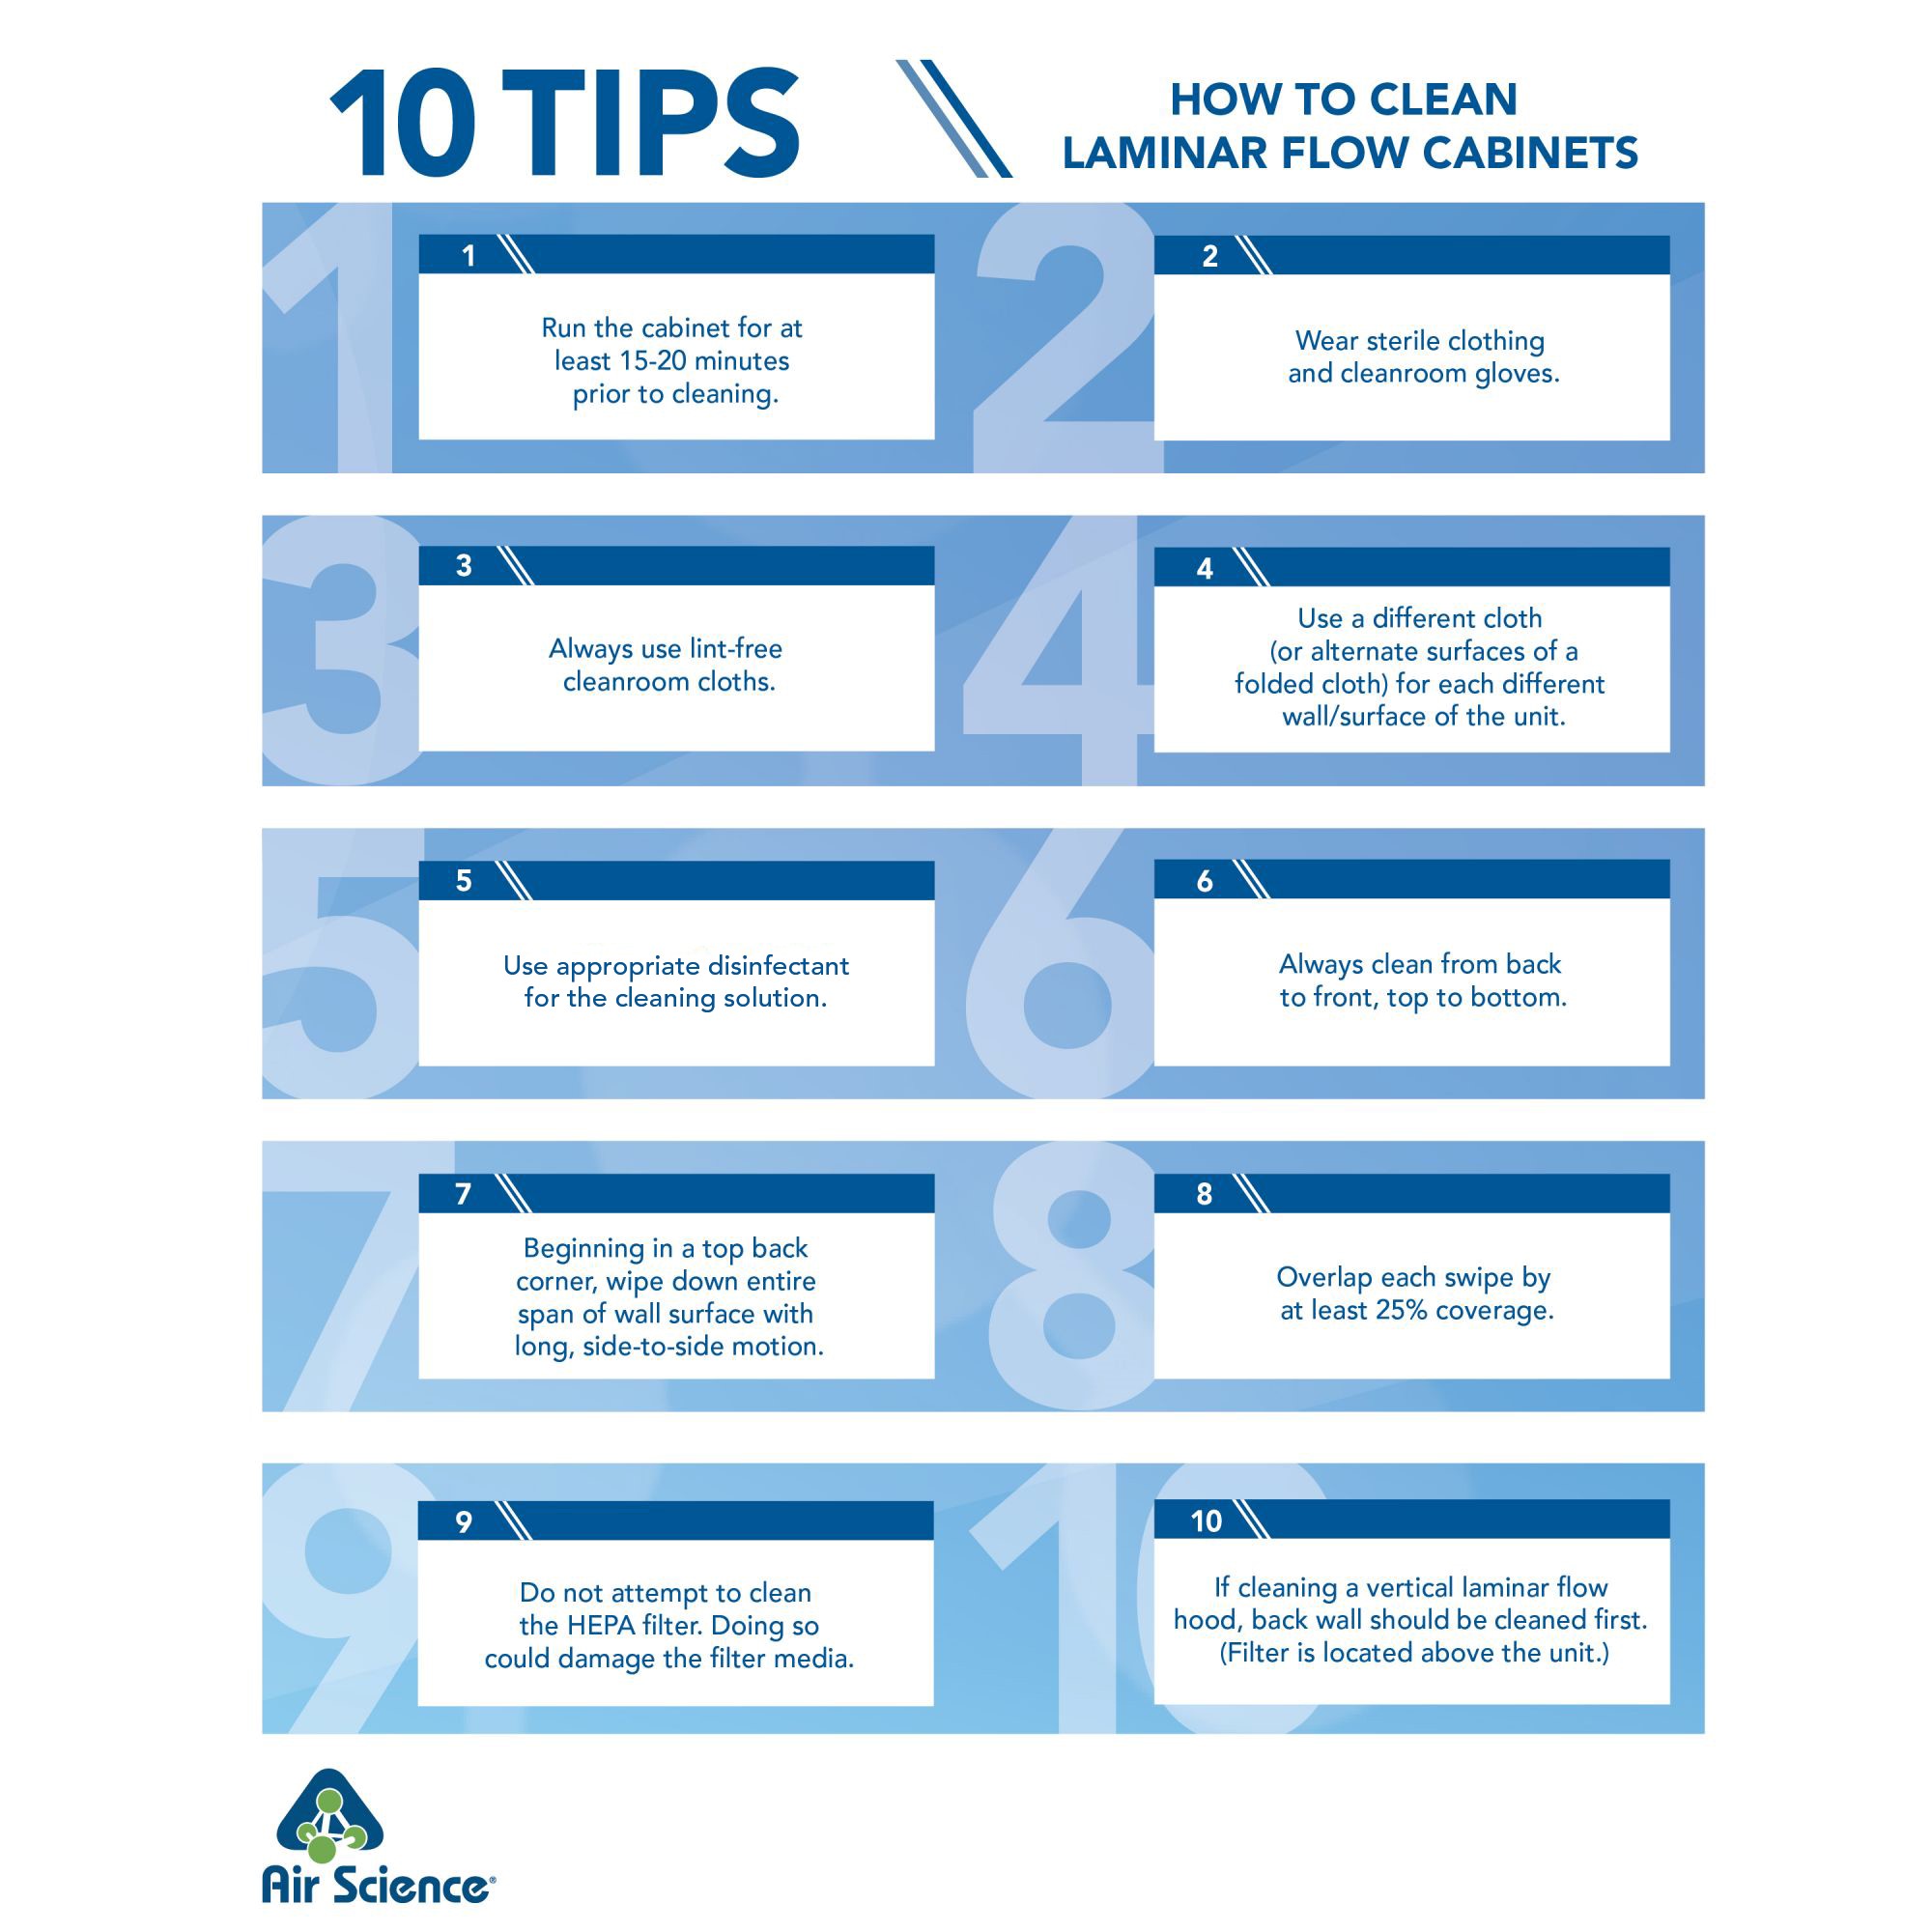 How to Clean a Laminar Flow Hood